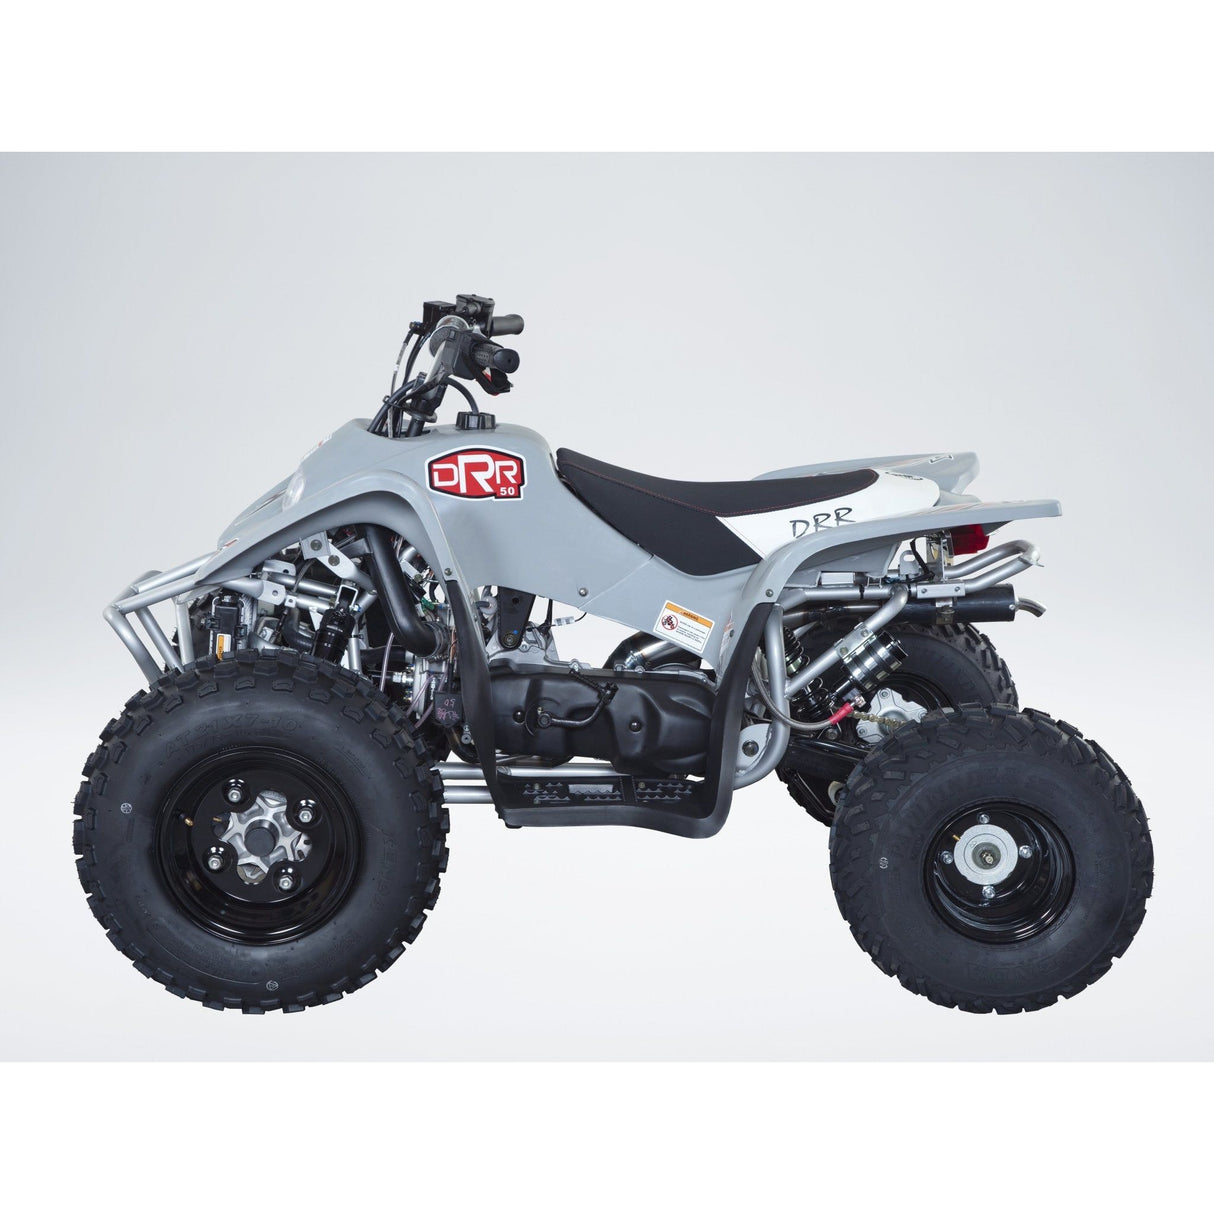 2020 DRR DRX 90cc ATV - R Model - G-FORCE POWERSPORTS